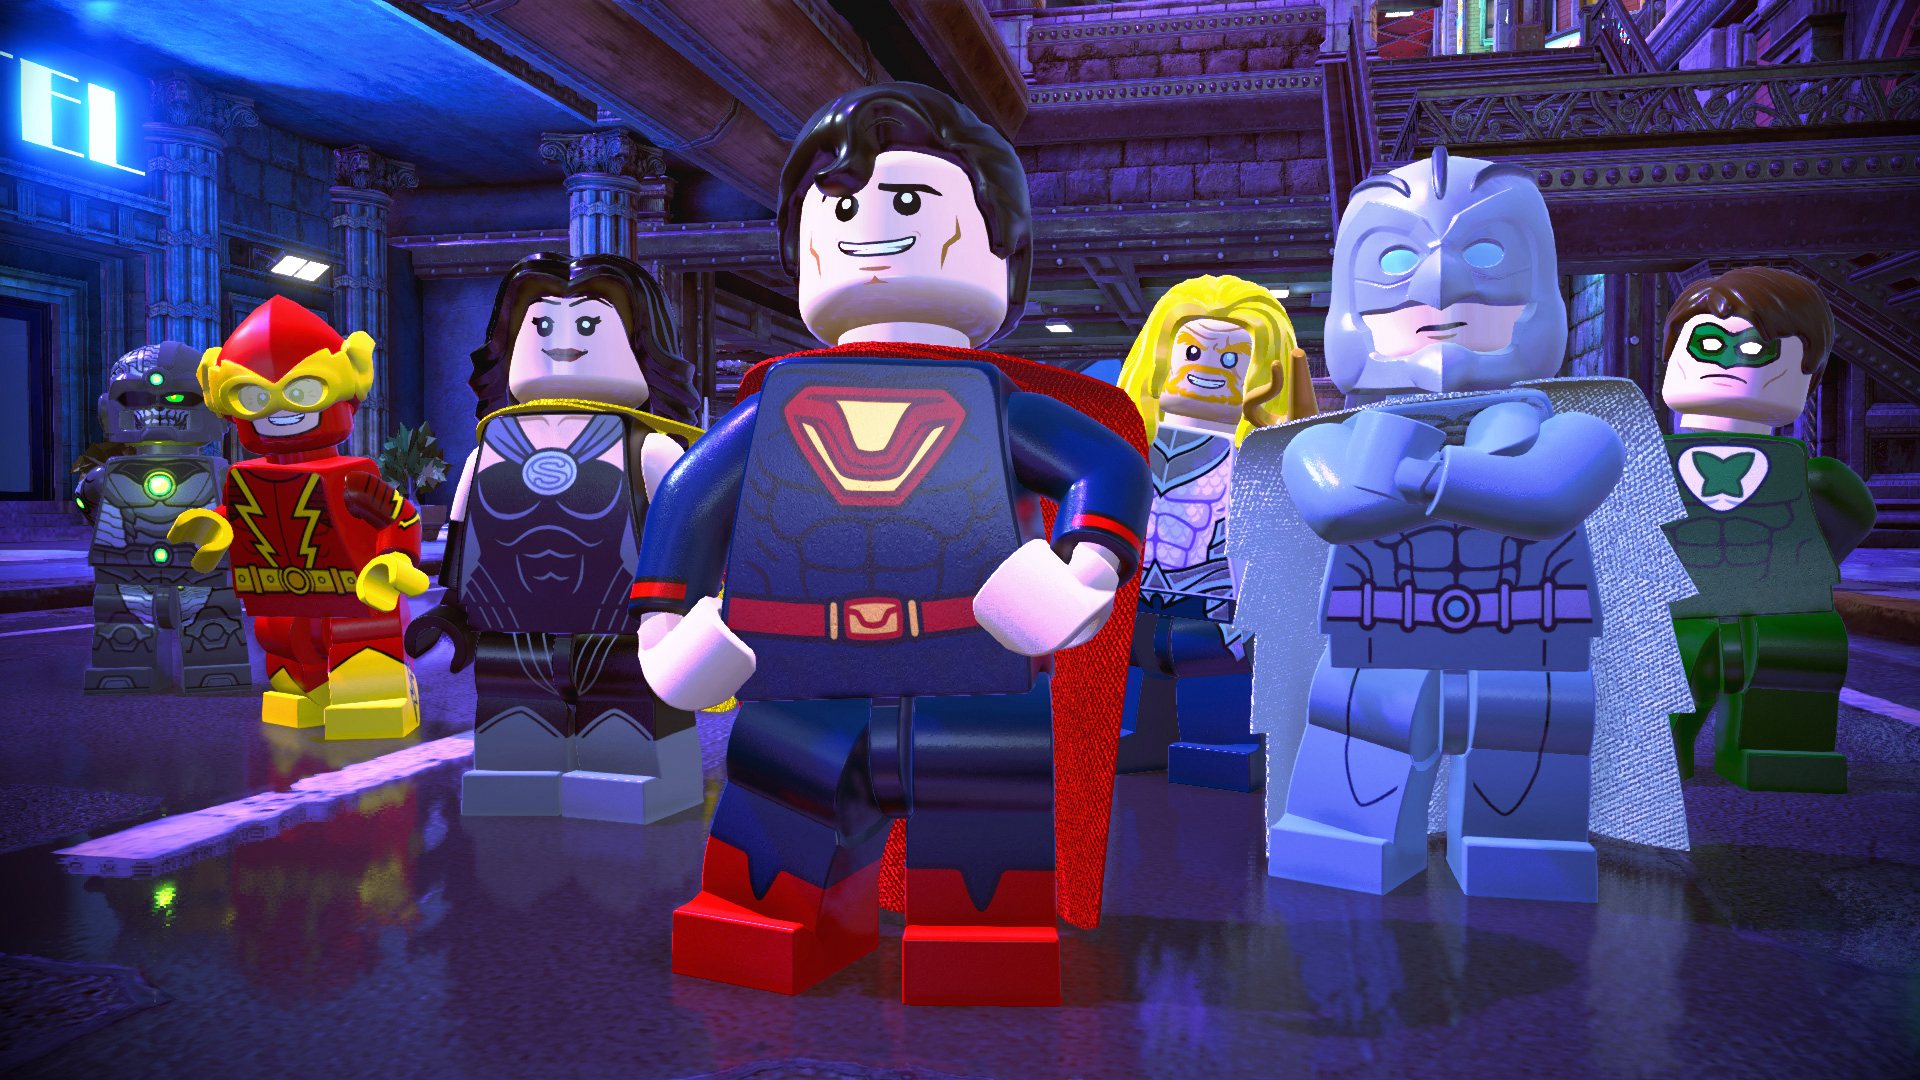 LEGO DC Super-Villains RU VPN Activated Steam CD Key